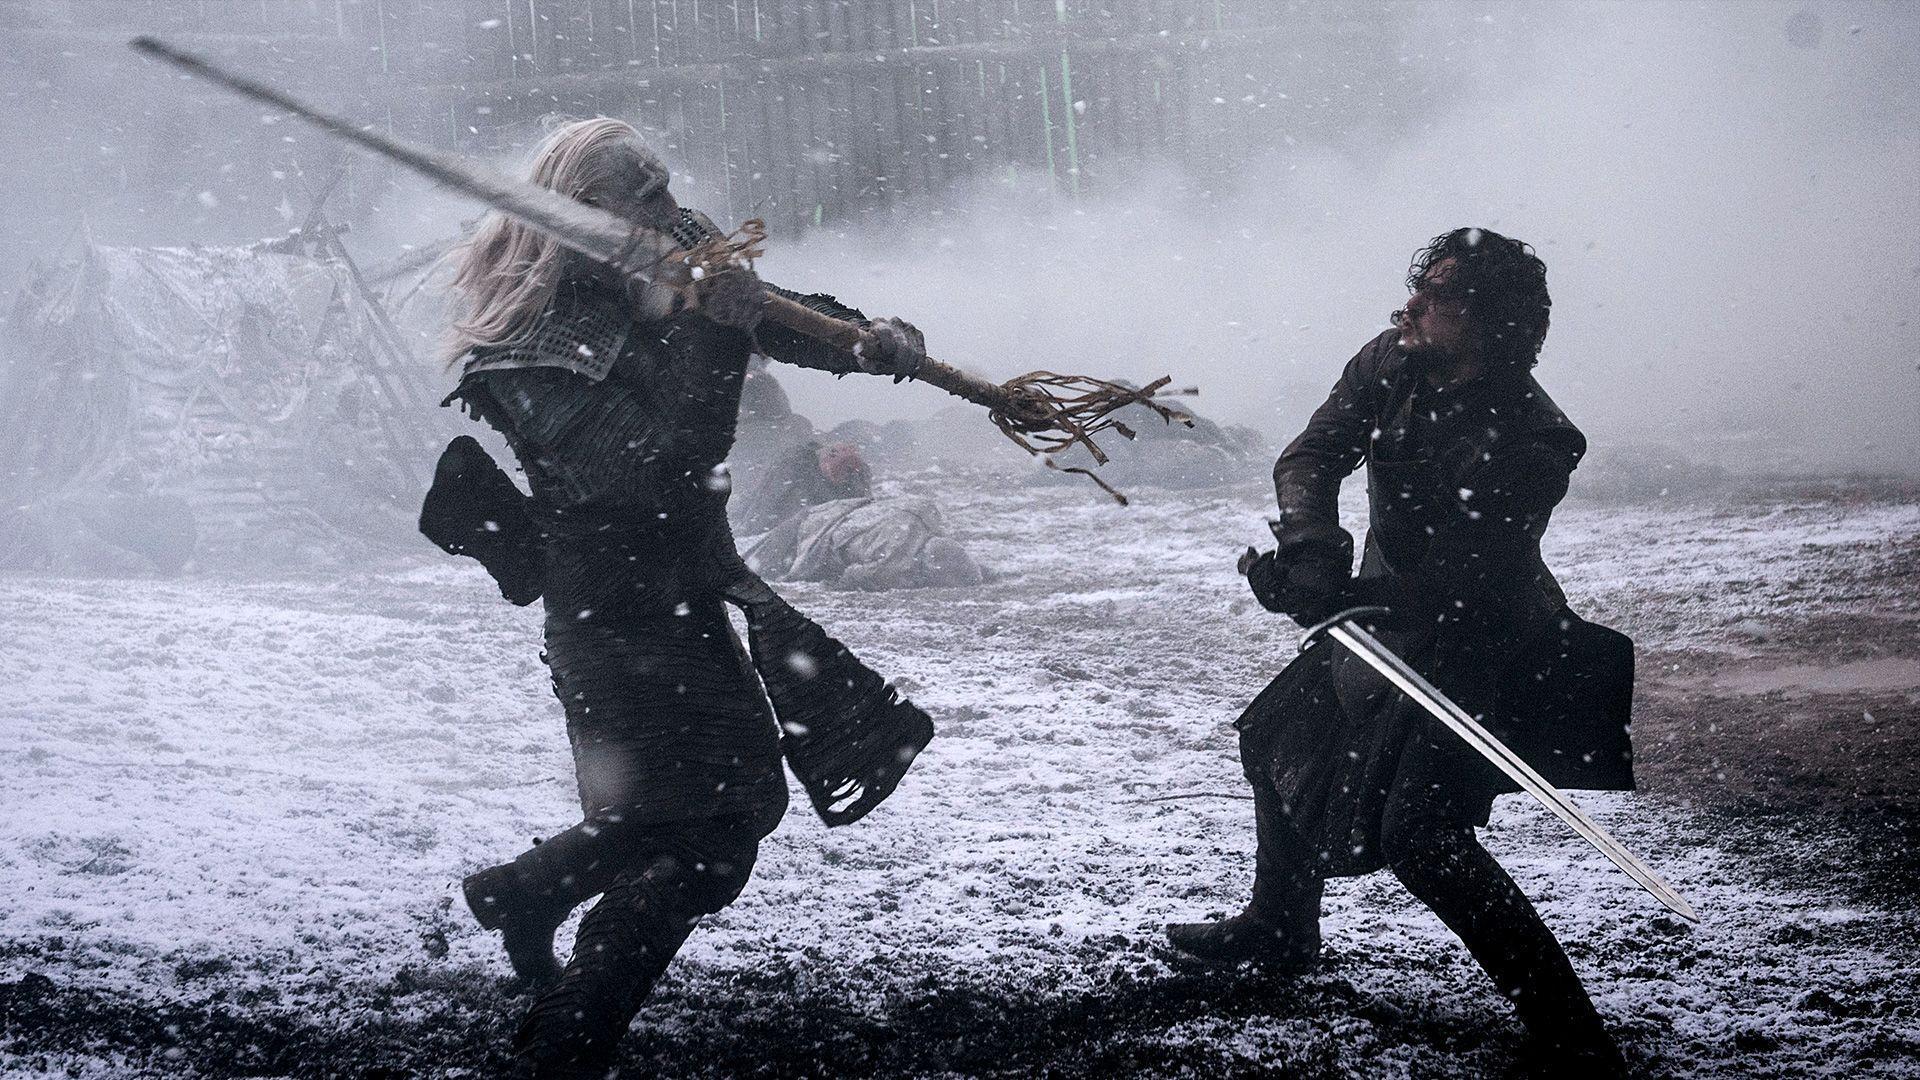 Game of Thrones' Season 7 Spoilers: Jon Snow vs Night King